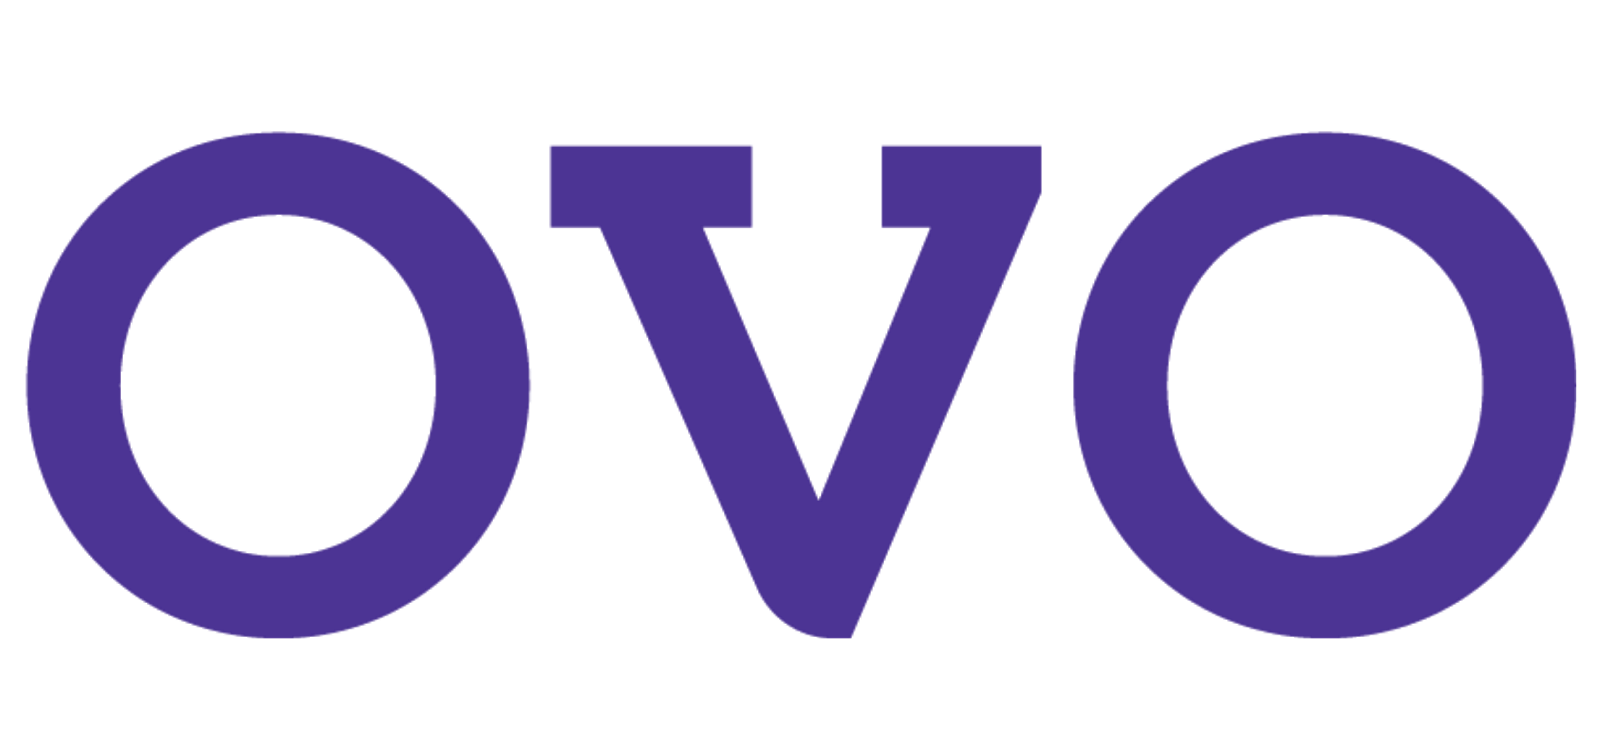 Logo OVO